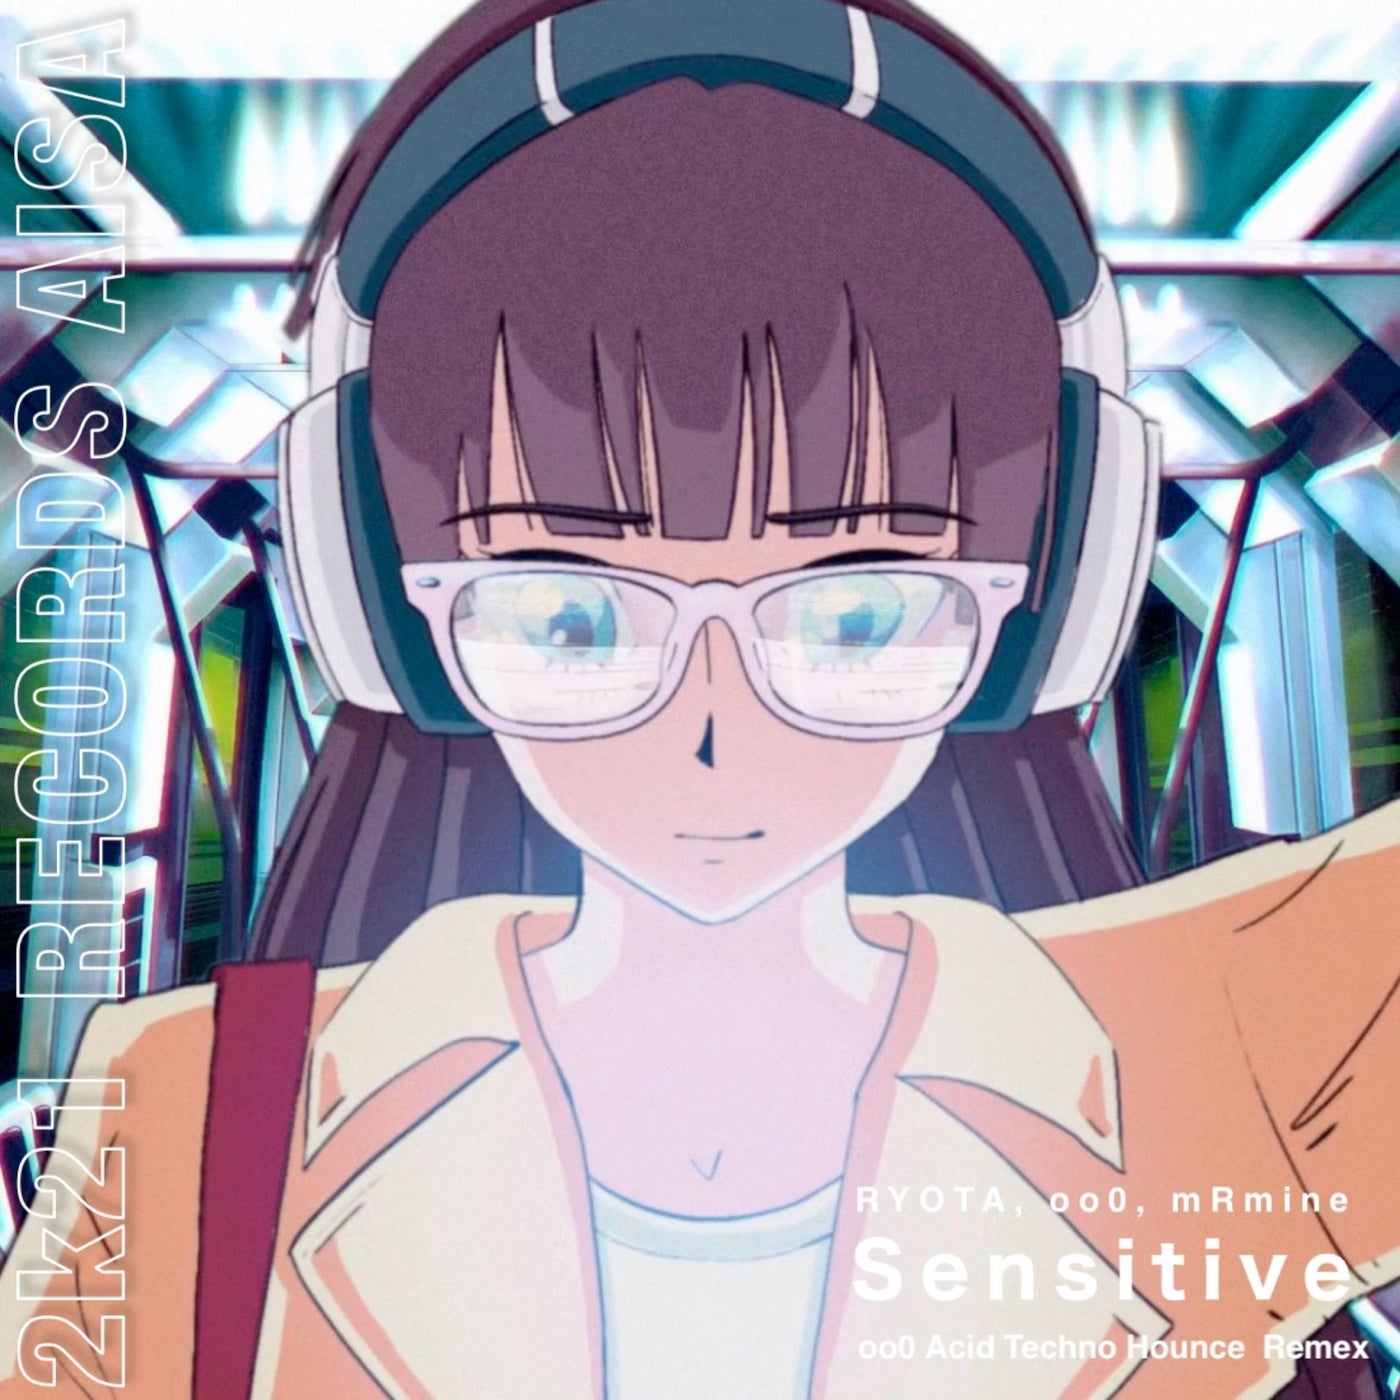 Sensitive (oo0 Acid Techno Hounce Remix)